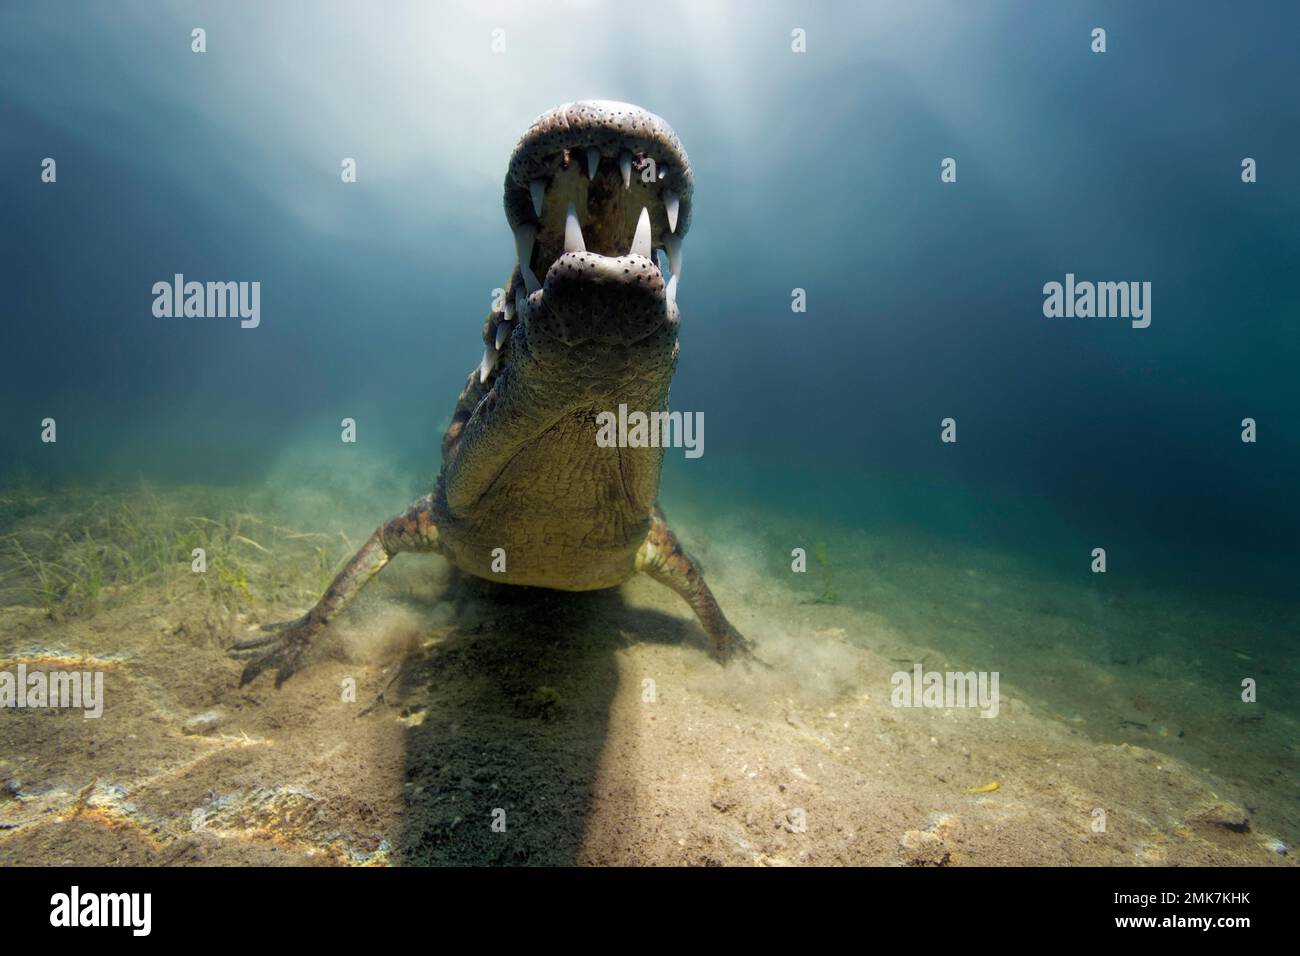 Pointed crocodile, or american crocodile (Crocodylus acutus), underwater, seabed, Caribbean Sea, Jardines de la Reina, Republic of Cuba, Caribbean Stock Photo